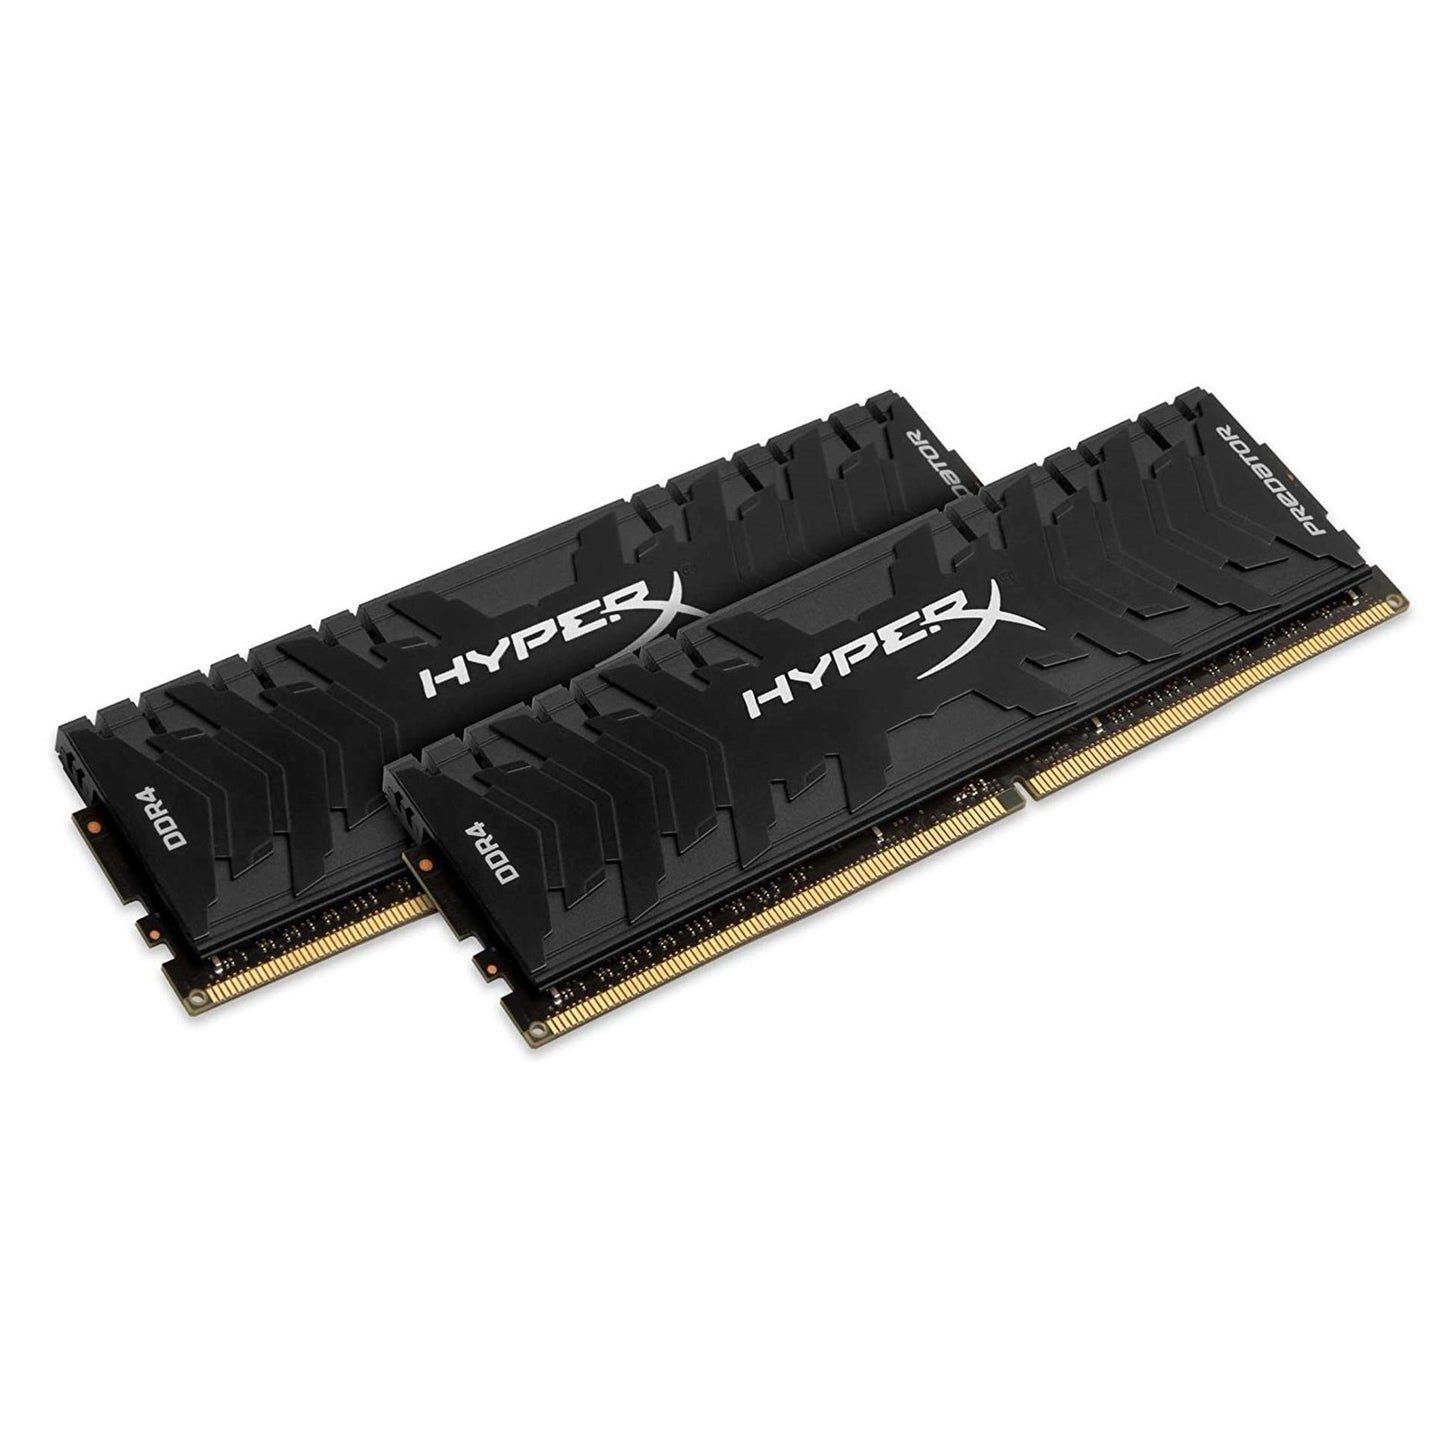 MEMORIA RAM KINGSTON HYPERX FURY RGB 16GB DDR4 3733MHZ CL19 HX437C19FB3A/16